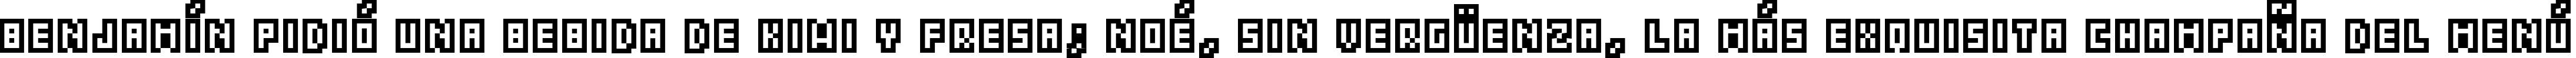 Пример написания шрифтом Grixel Acme 5 CompCapsO текста на испанском